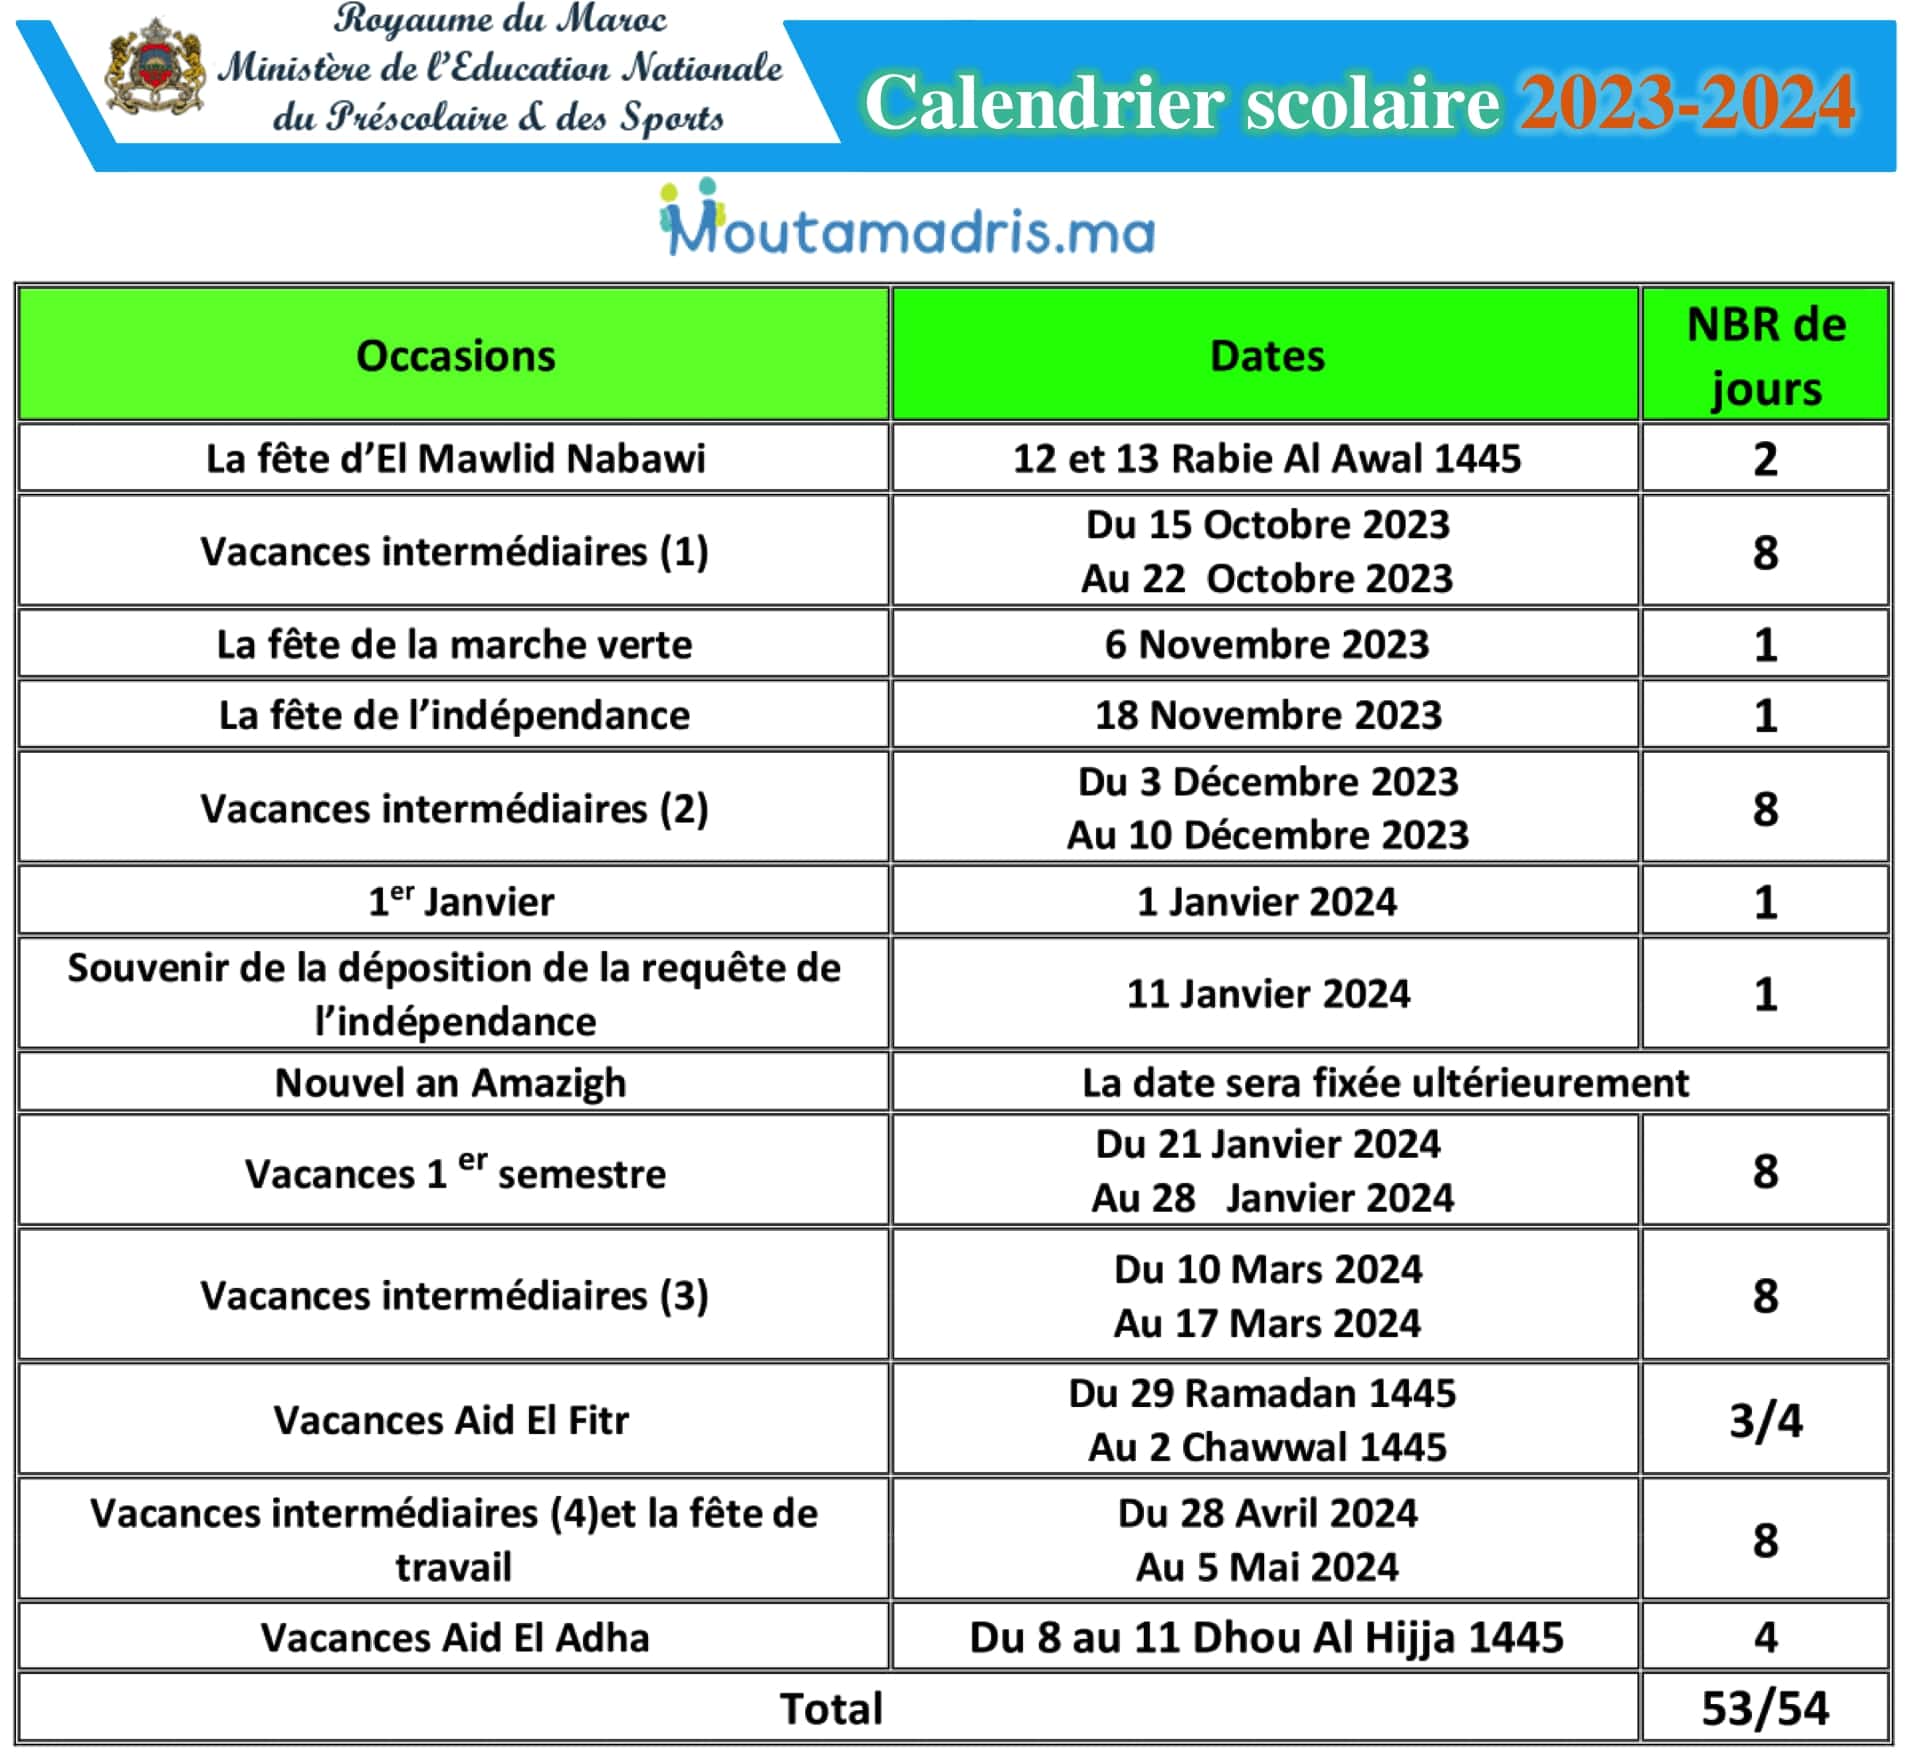 Vacances Scolaires 2023-2024 maroc